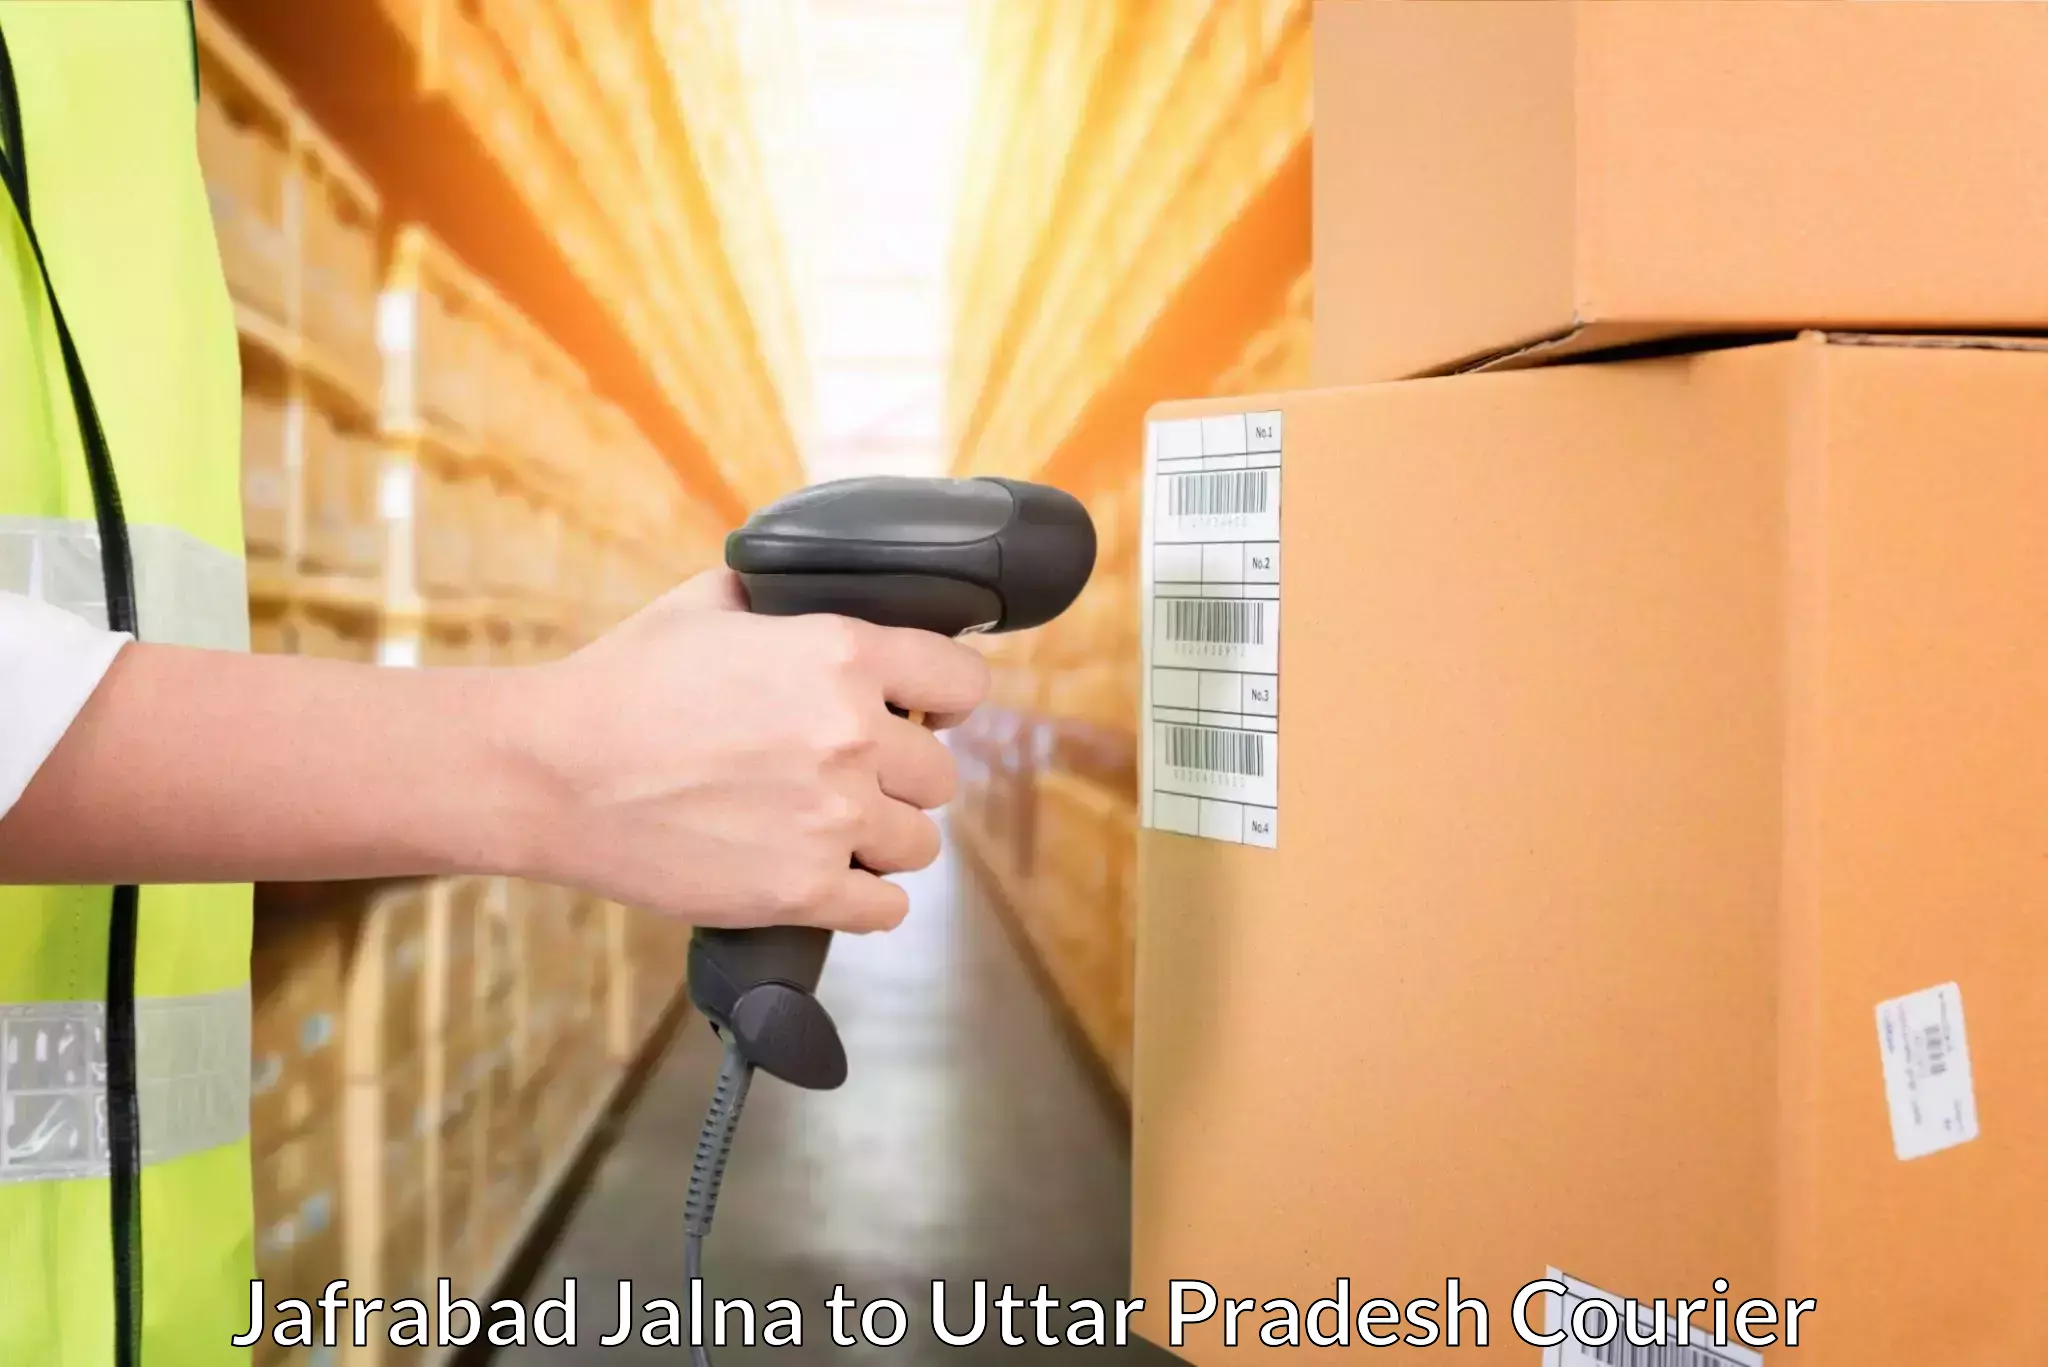 Courier service partnerships Jafrabad Jalna to Uttar Pradesh